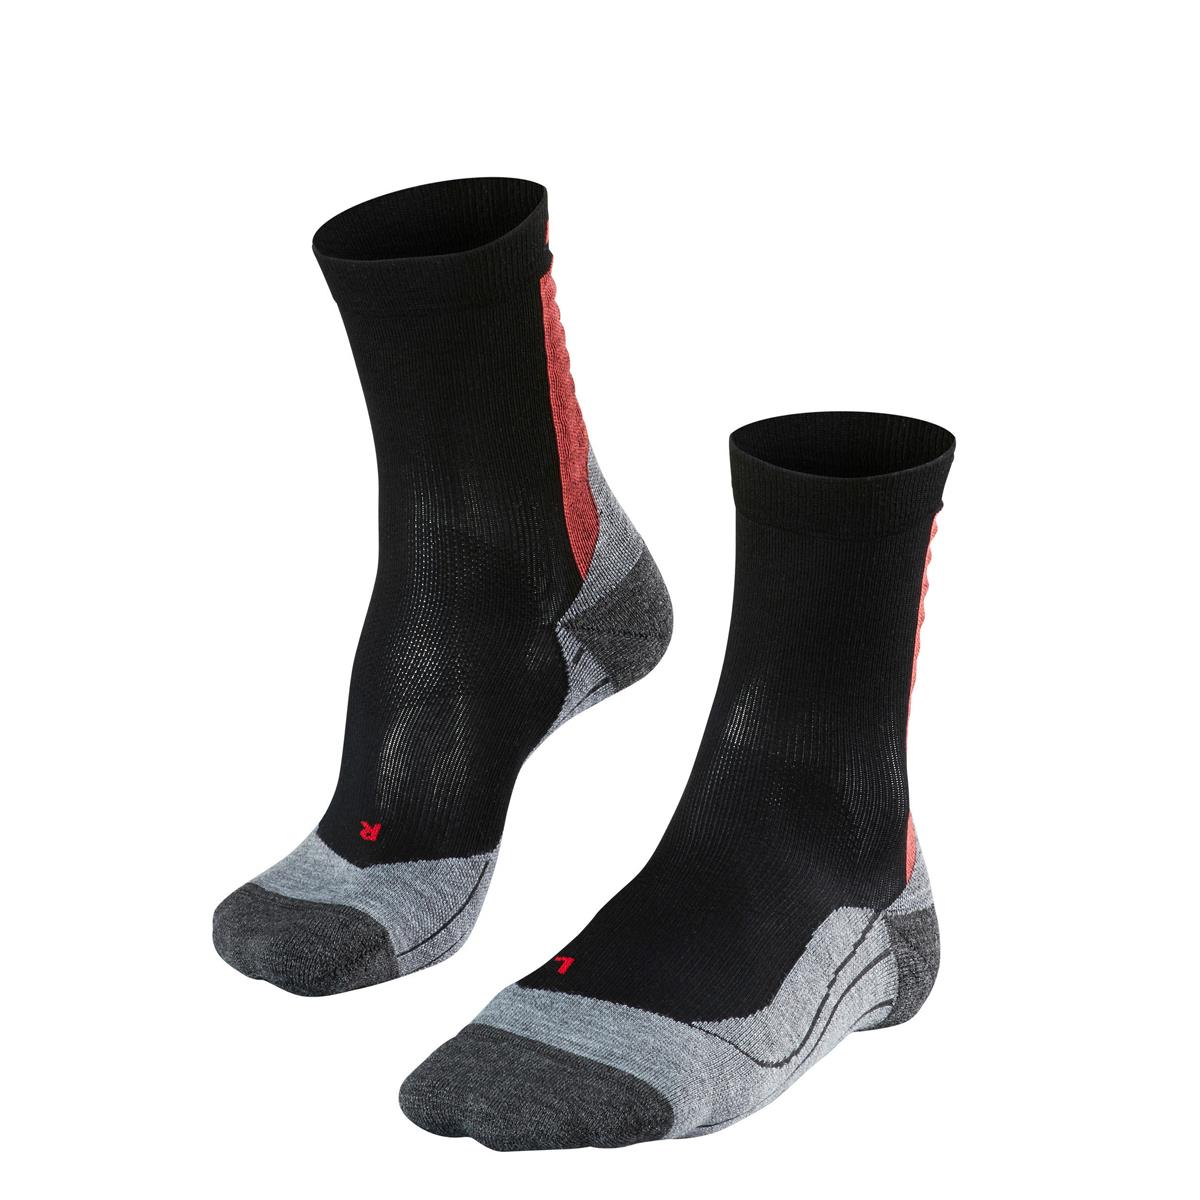 Run Achilles Health Socks - Women's